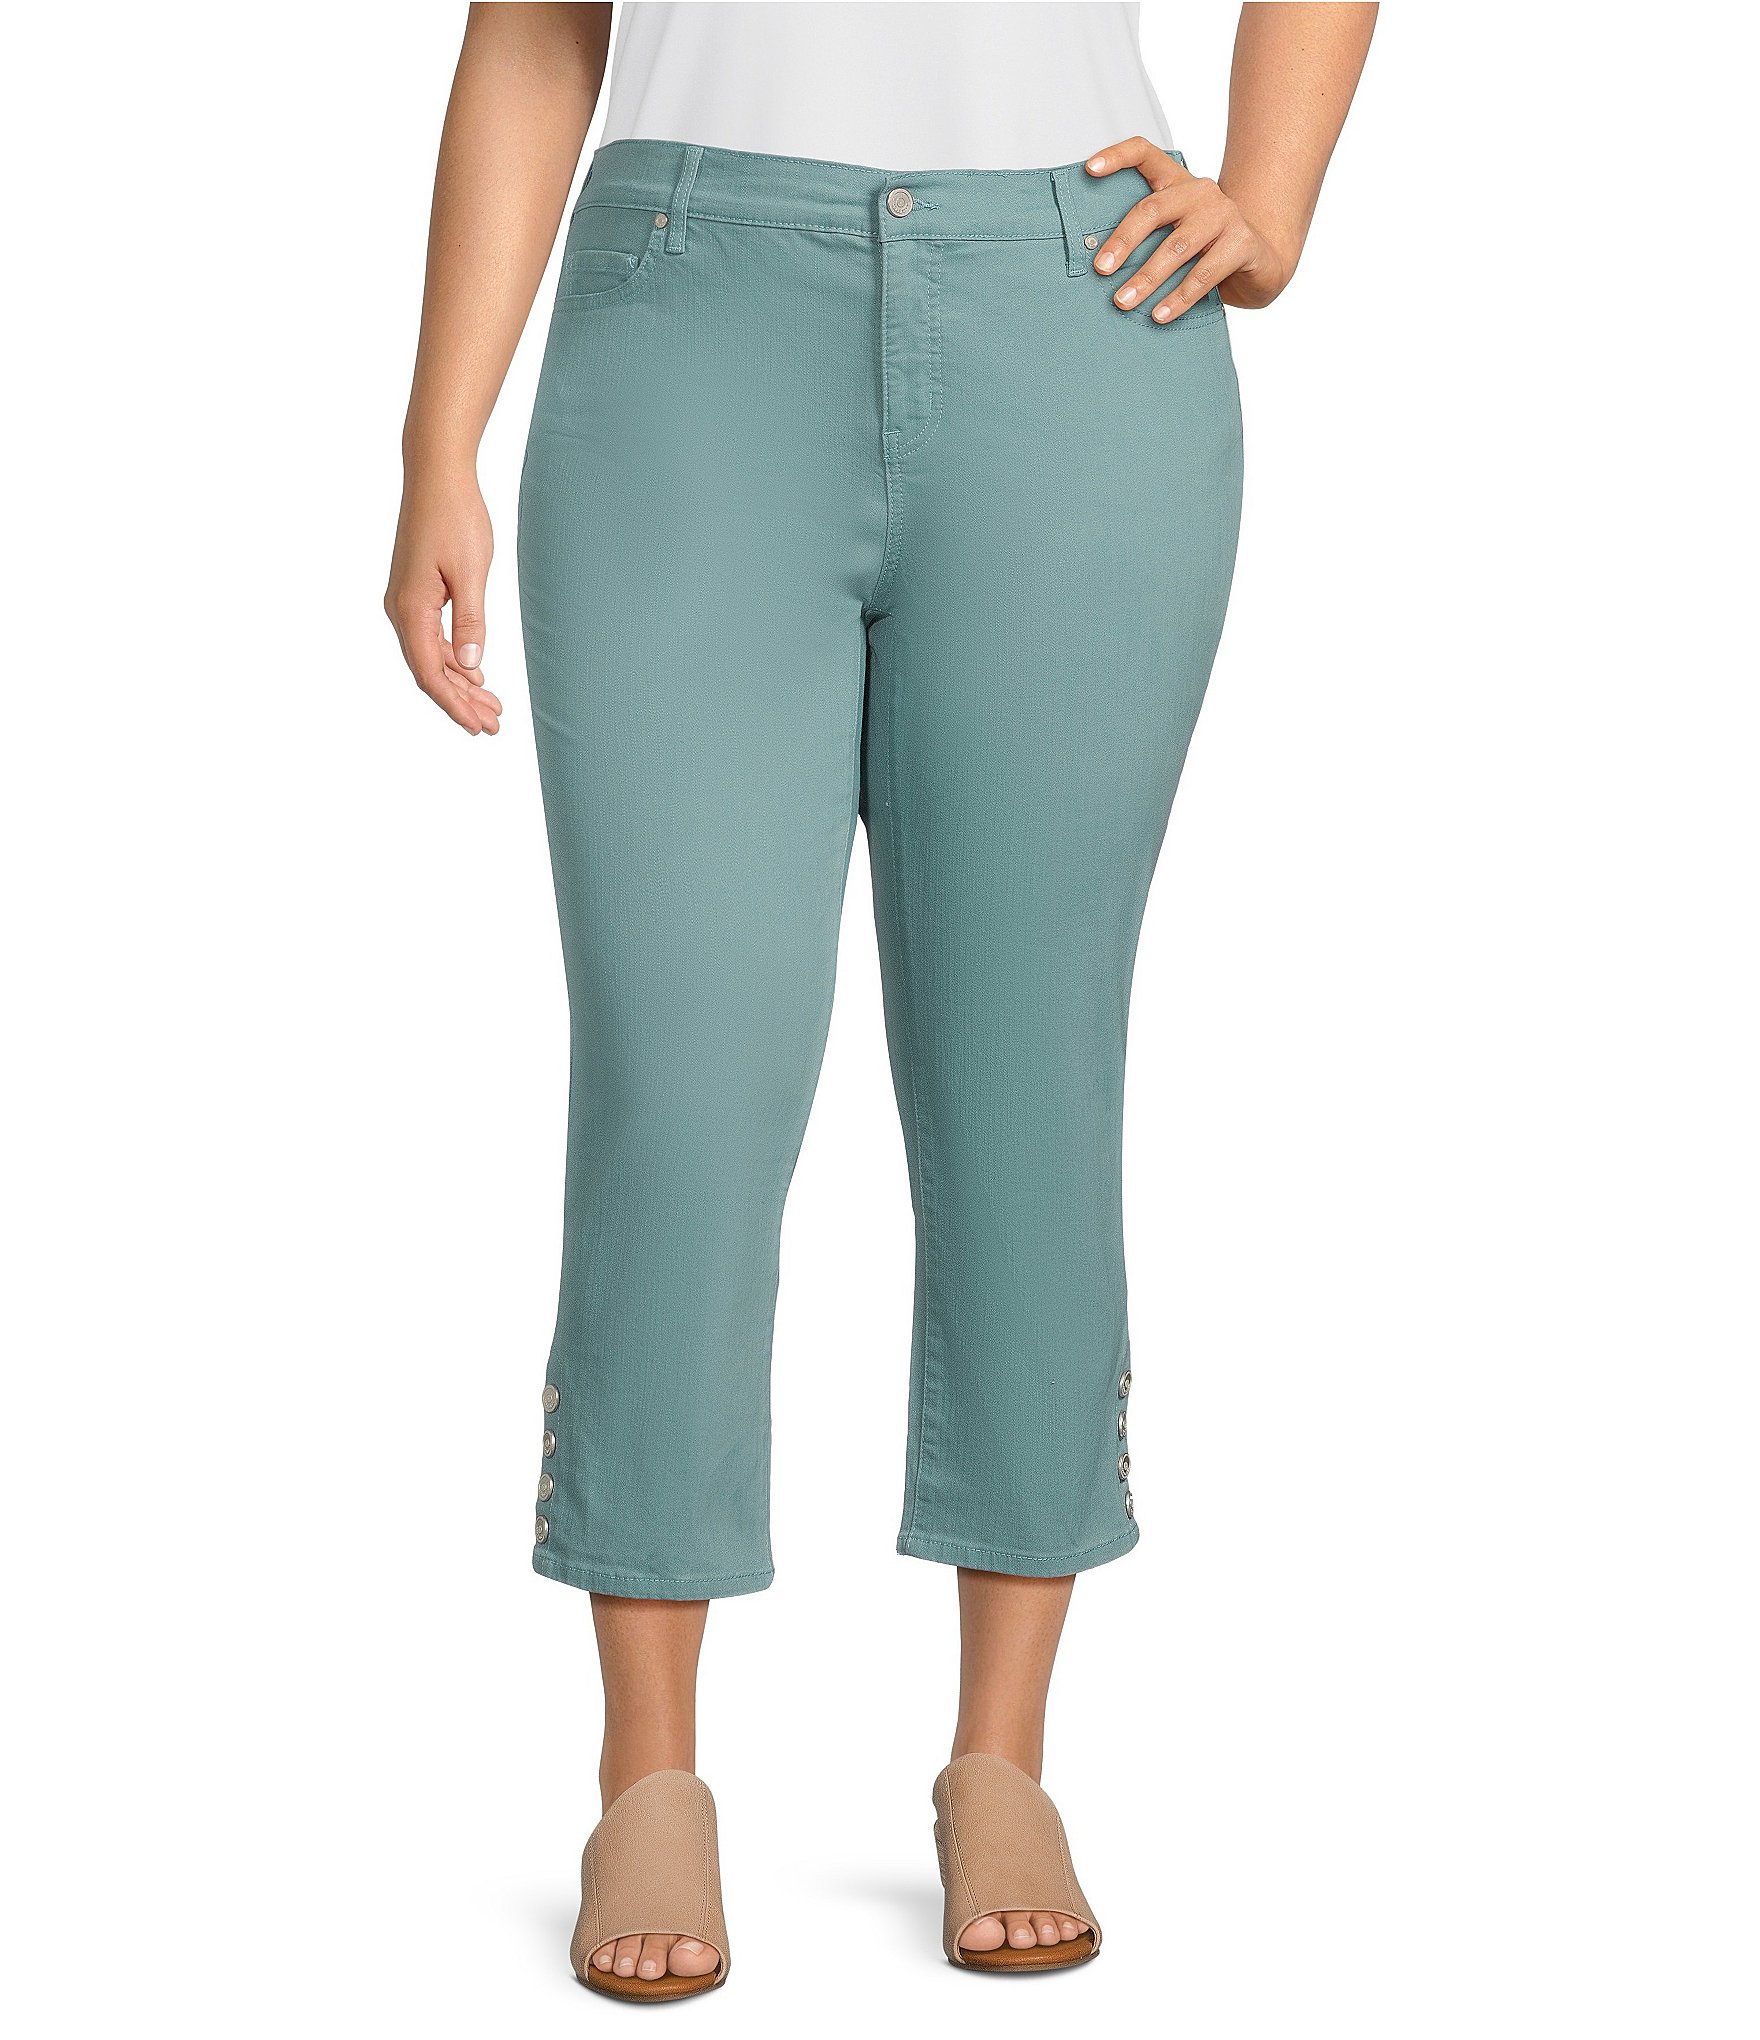 D JEANS Womens Stretch Capri Jeans Size 16 W Light Wash Blue Denim